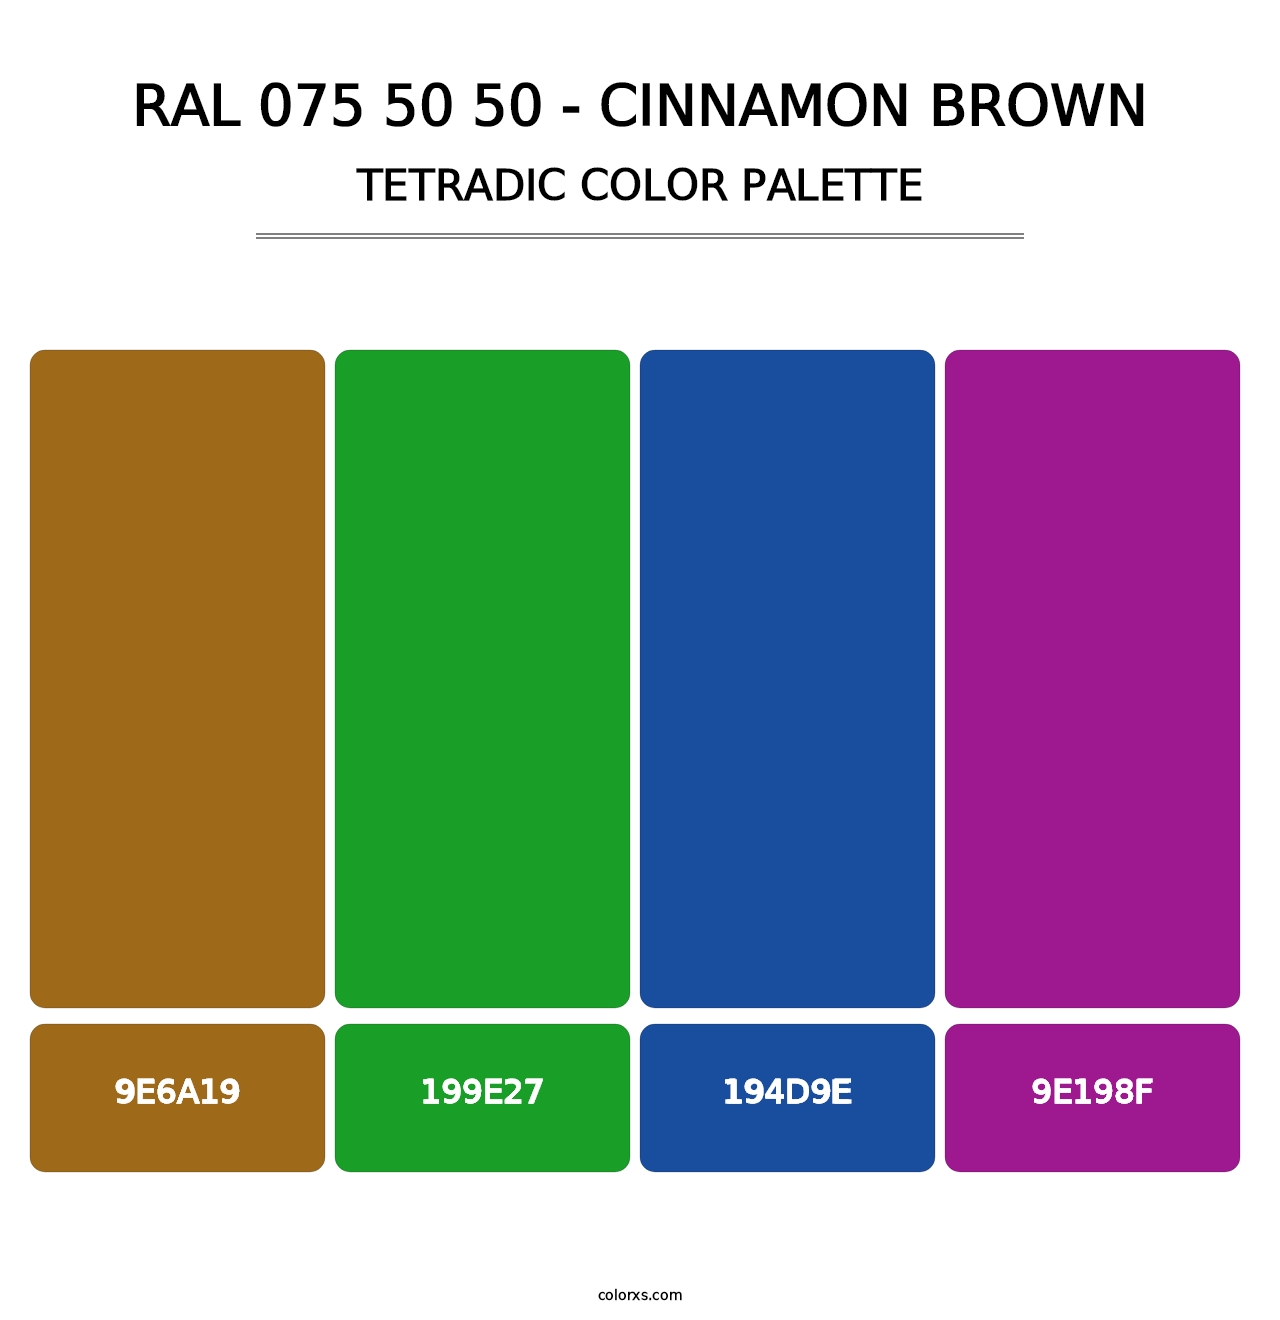 RAL 075 50 50 - Cinnamon Brown - Tetradic Color Palette